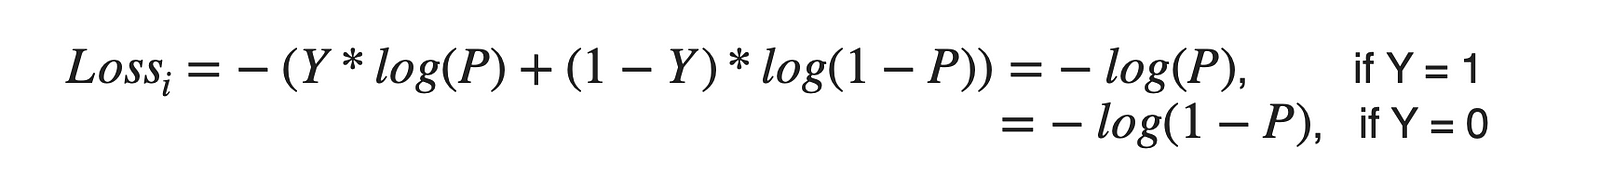 Binary cross entropy formula